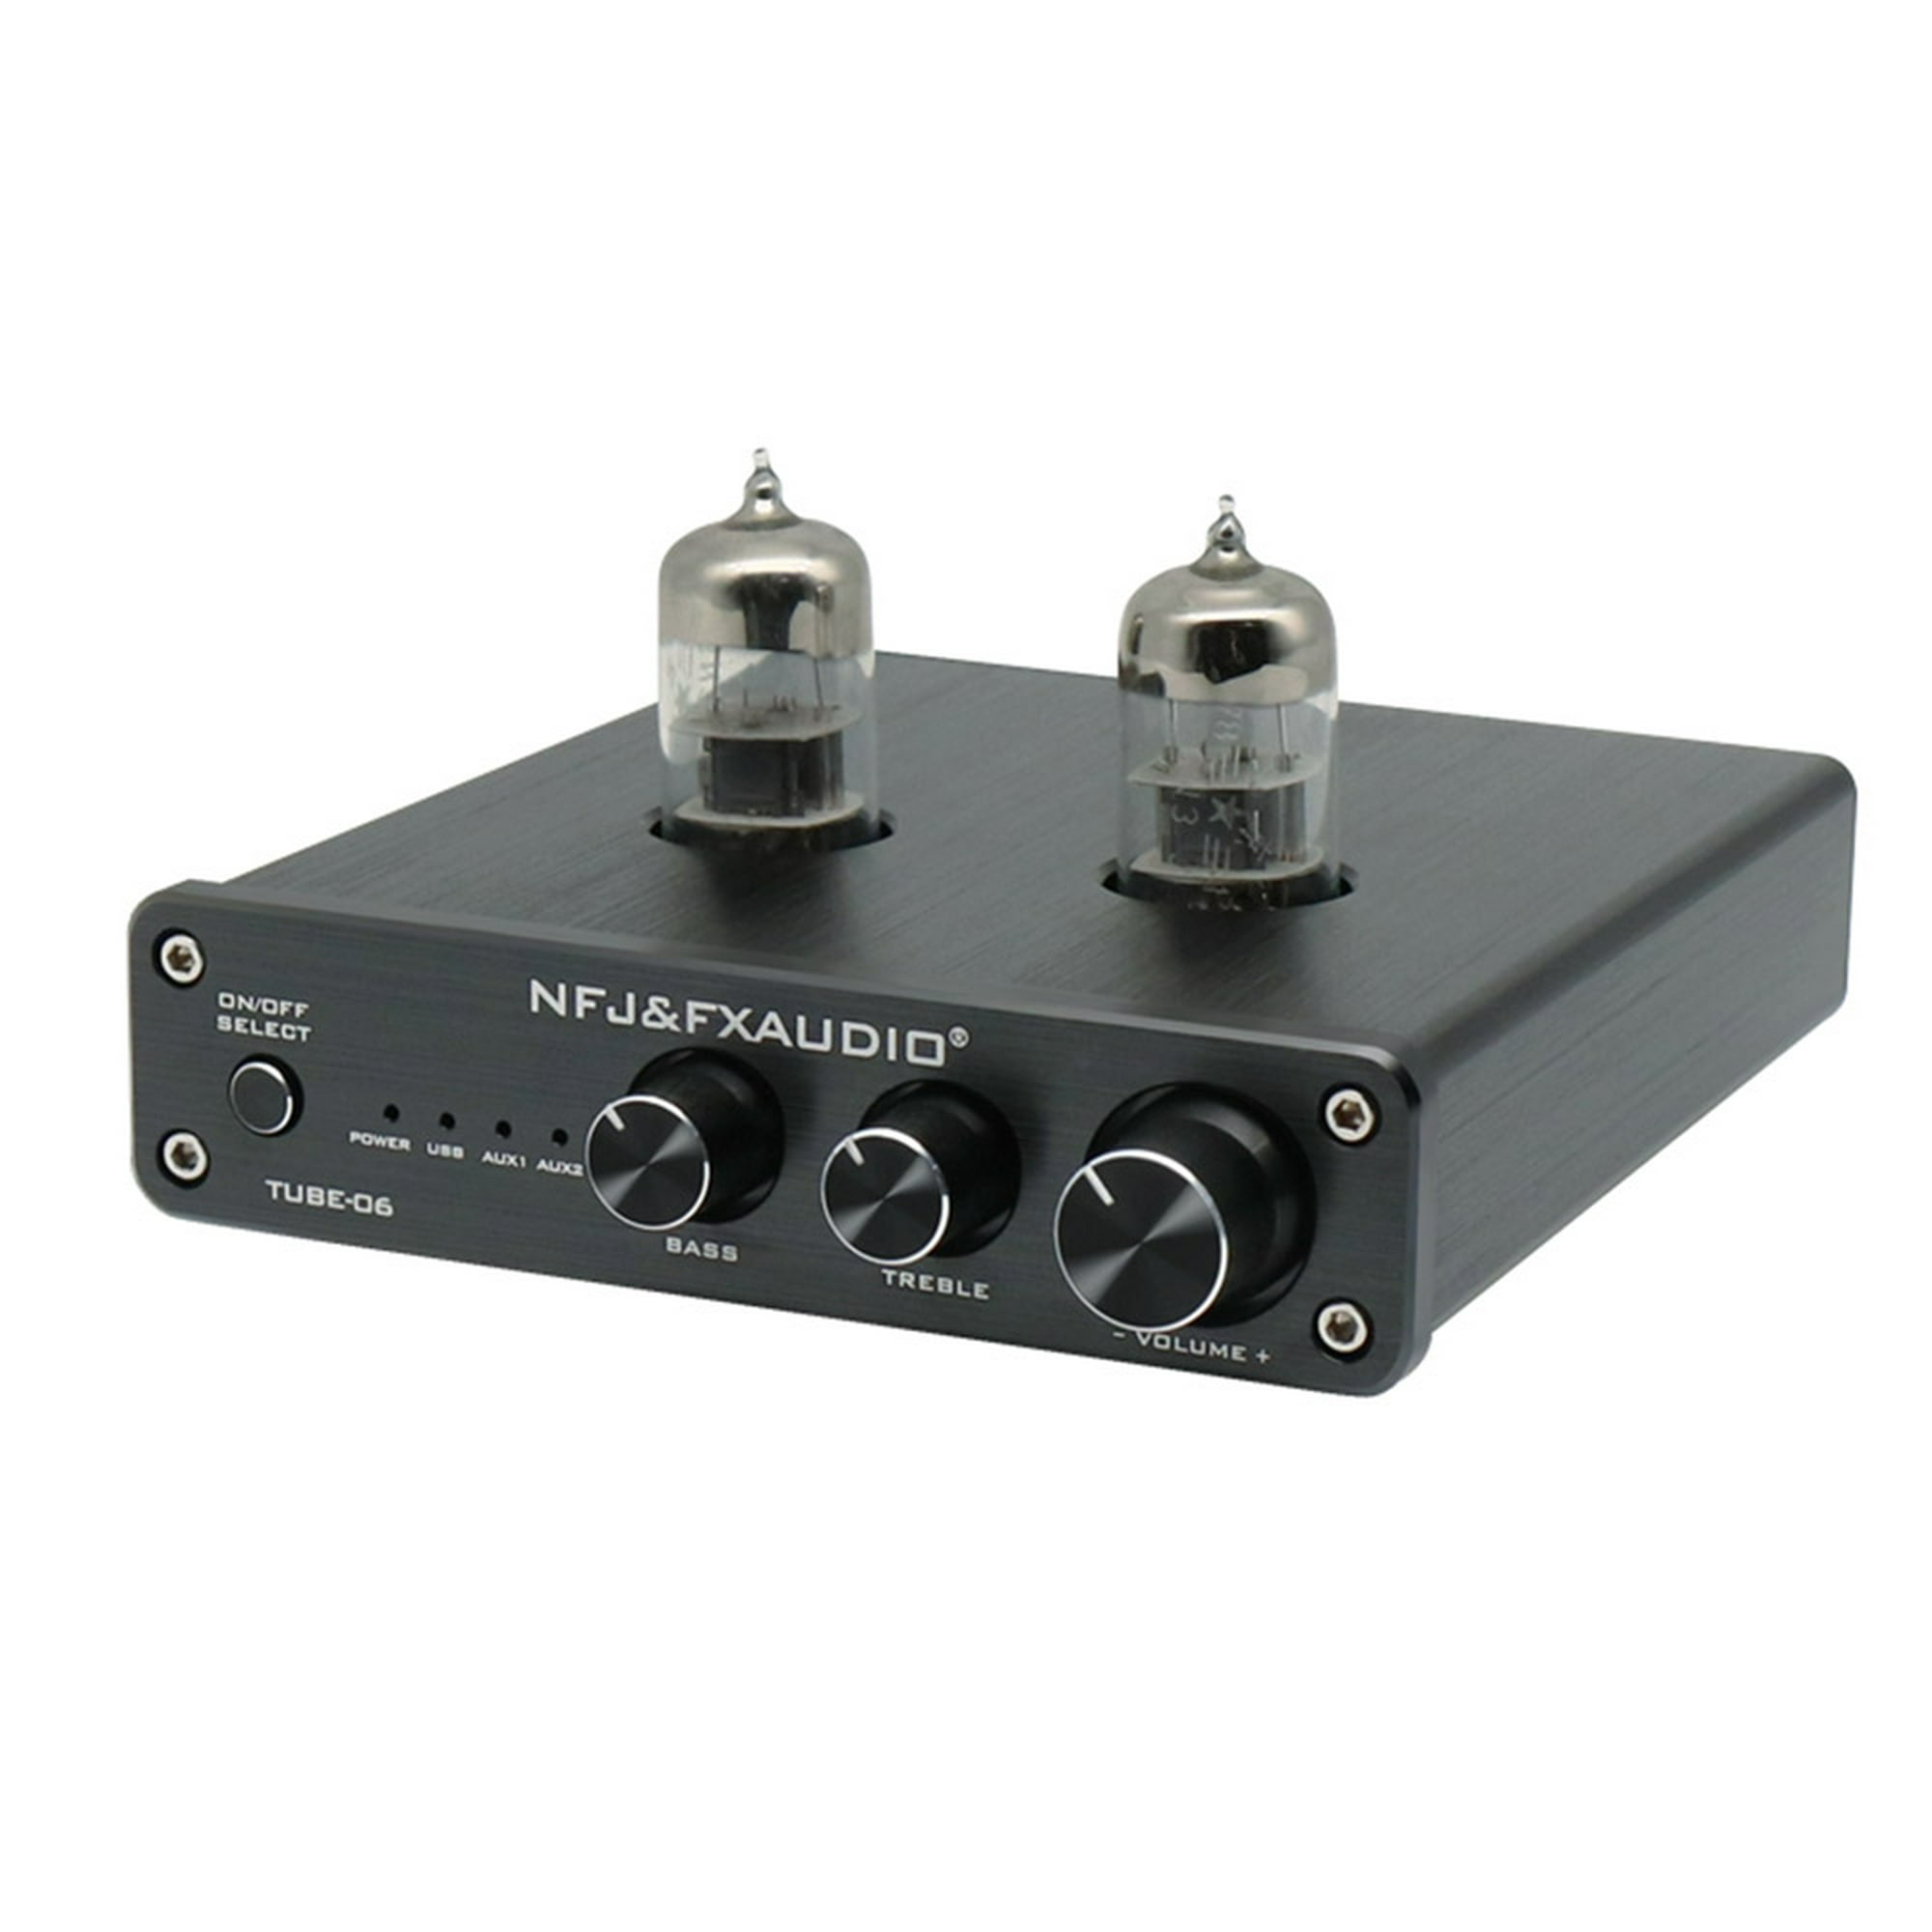 Amplificador de audio FX-AUDIO FX 502E-L HiFi 2.0 BT 5.1 Mini amplificador  de potencia de audio completamente digital 75W * 2 Ajuste de graves y  agudos FX-AUDIO Amplificador de audio